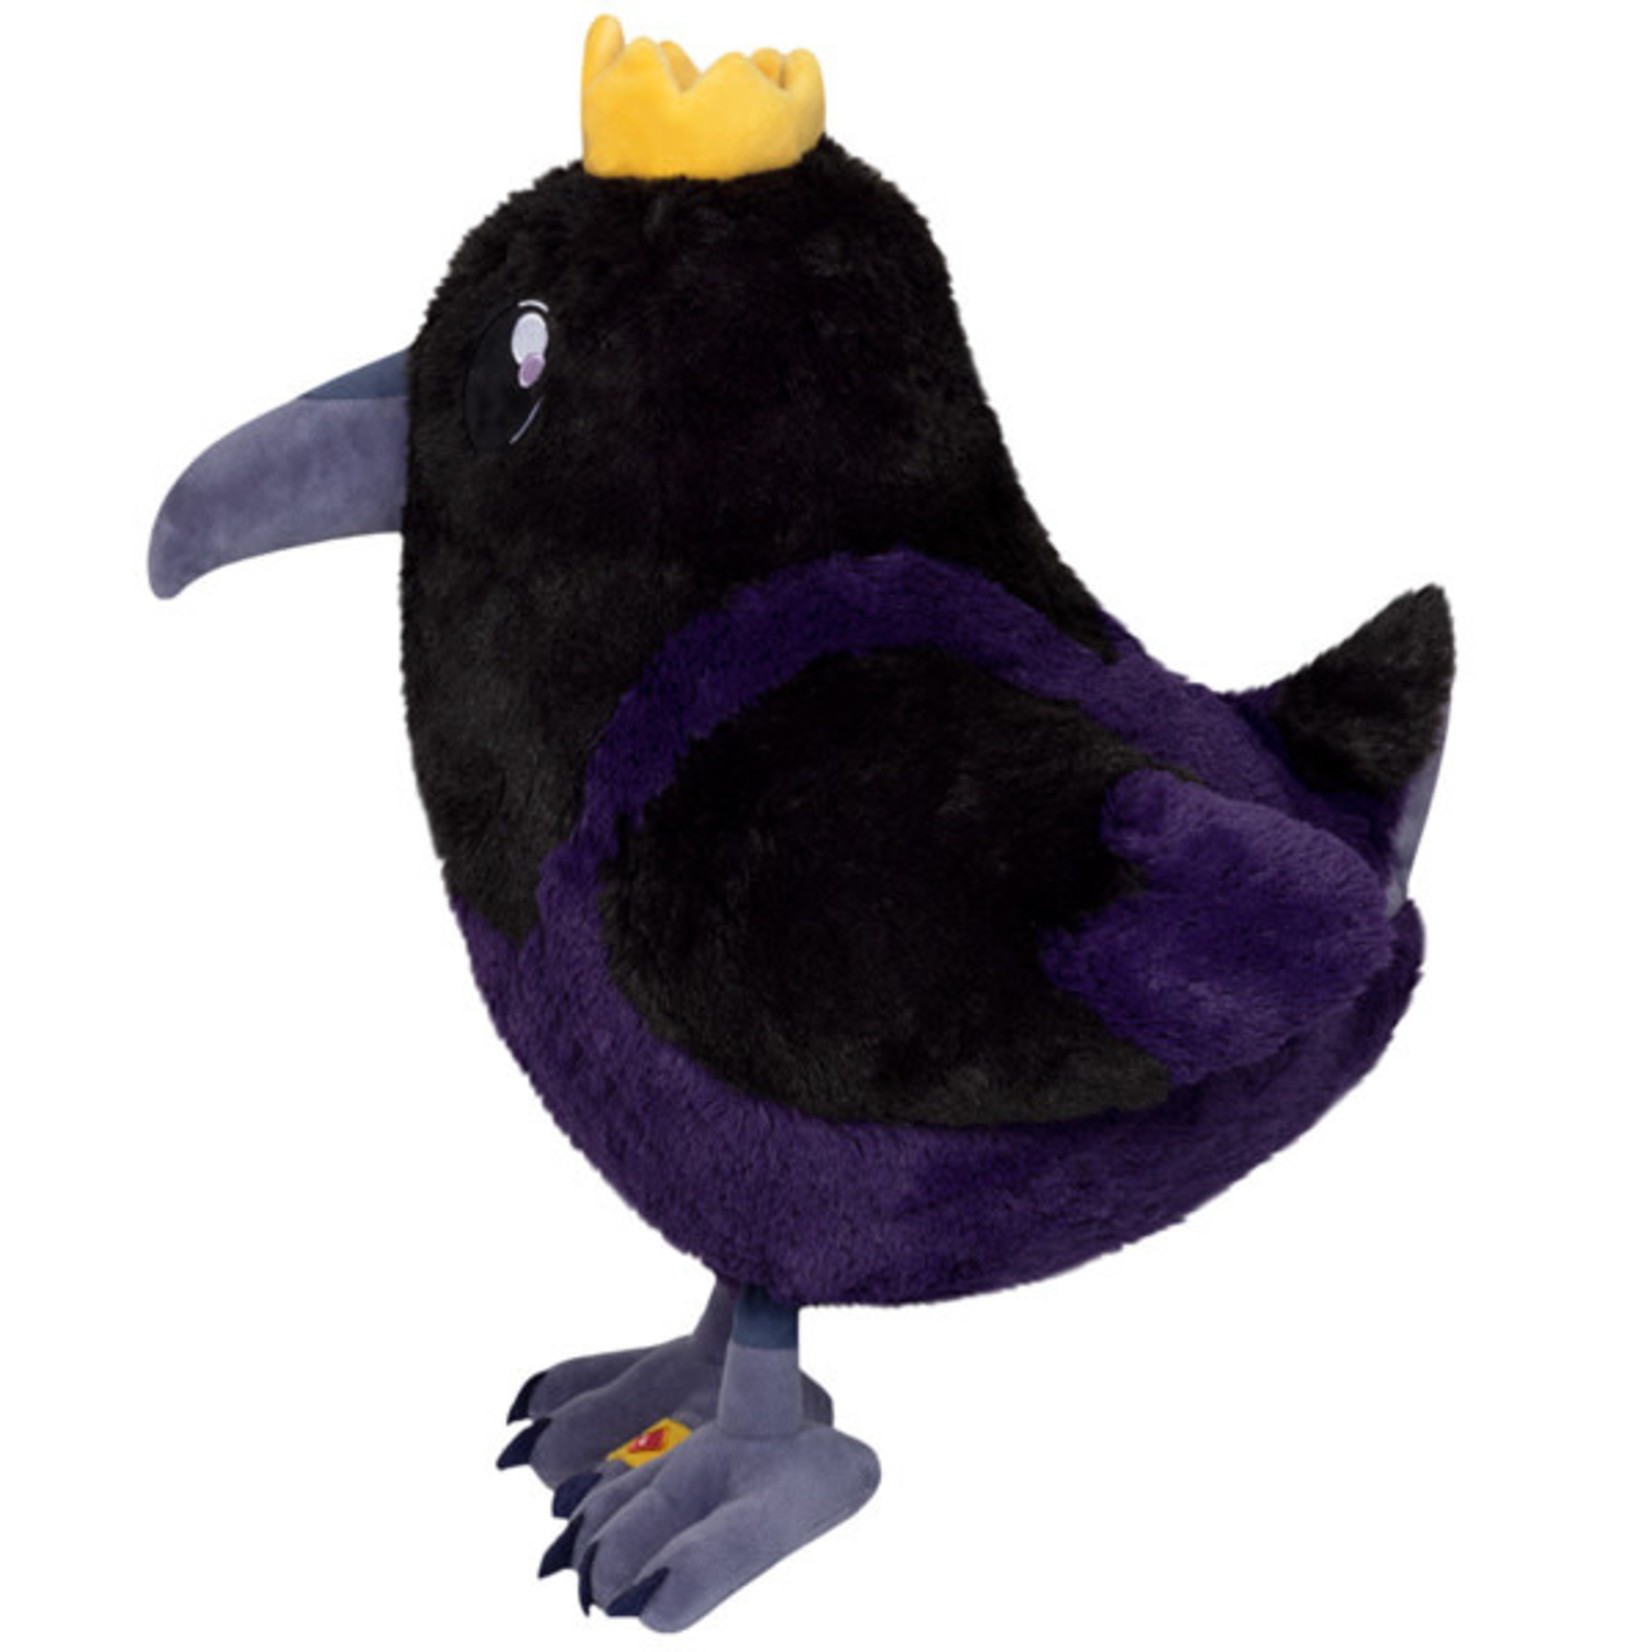 Squishable Squishable King Raven